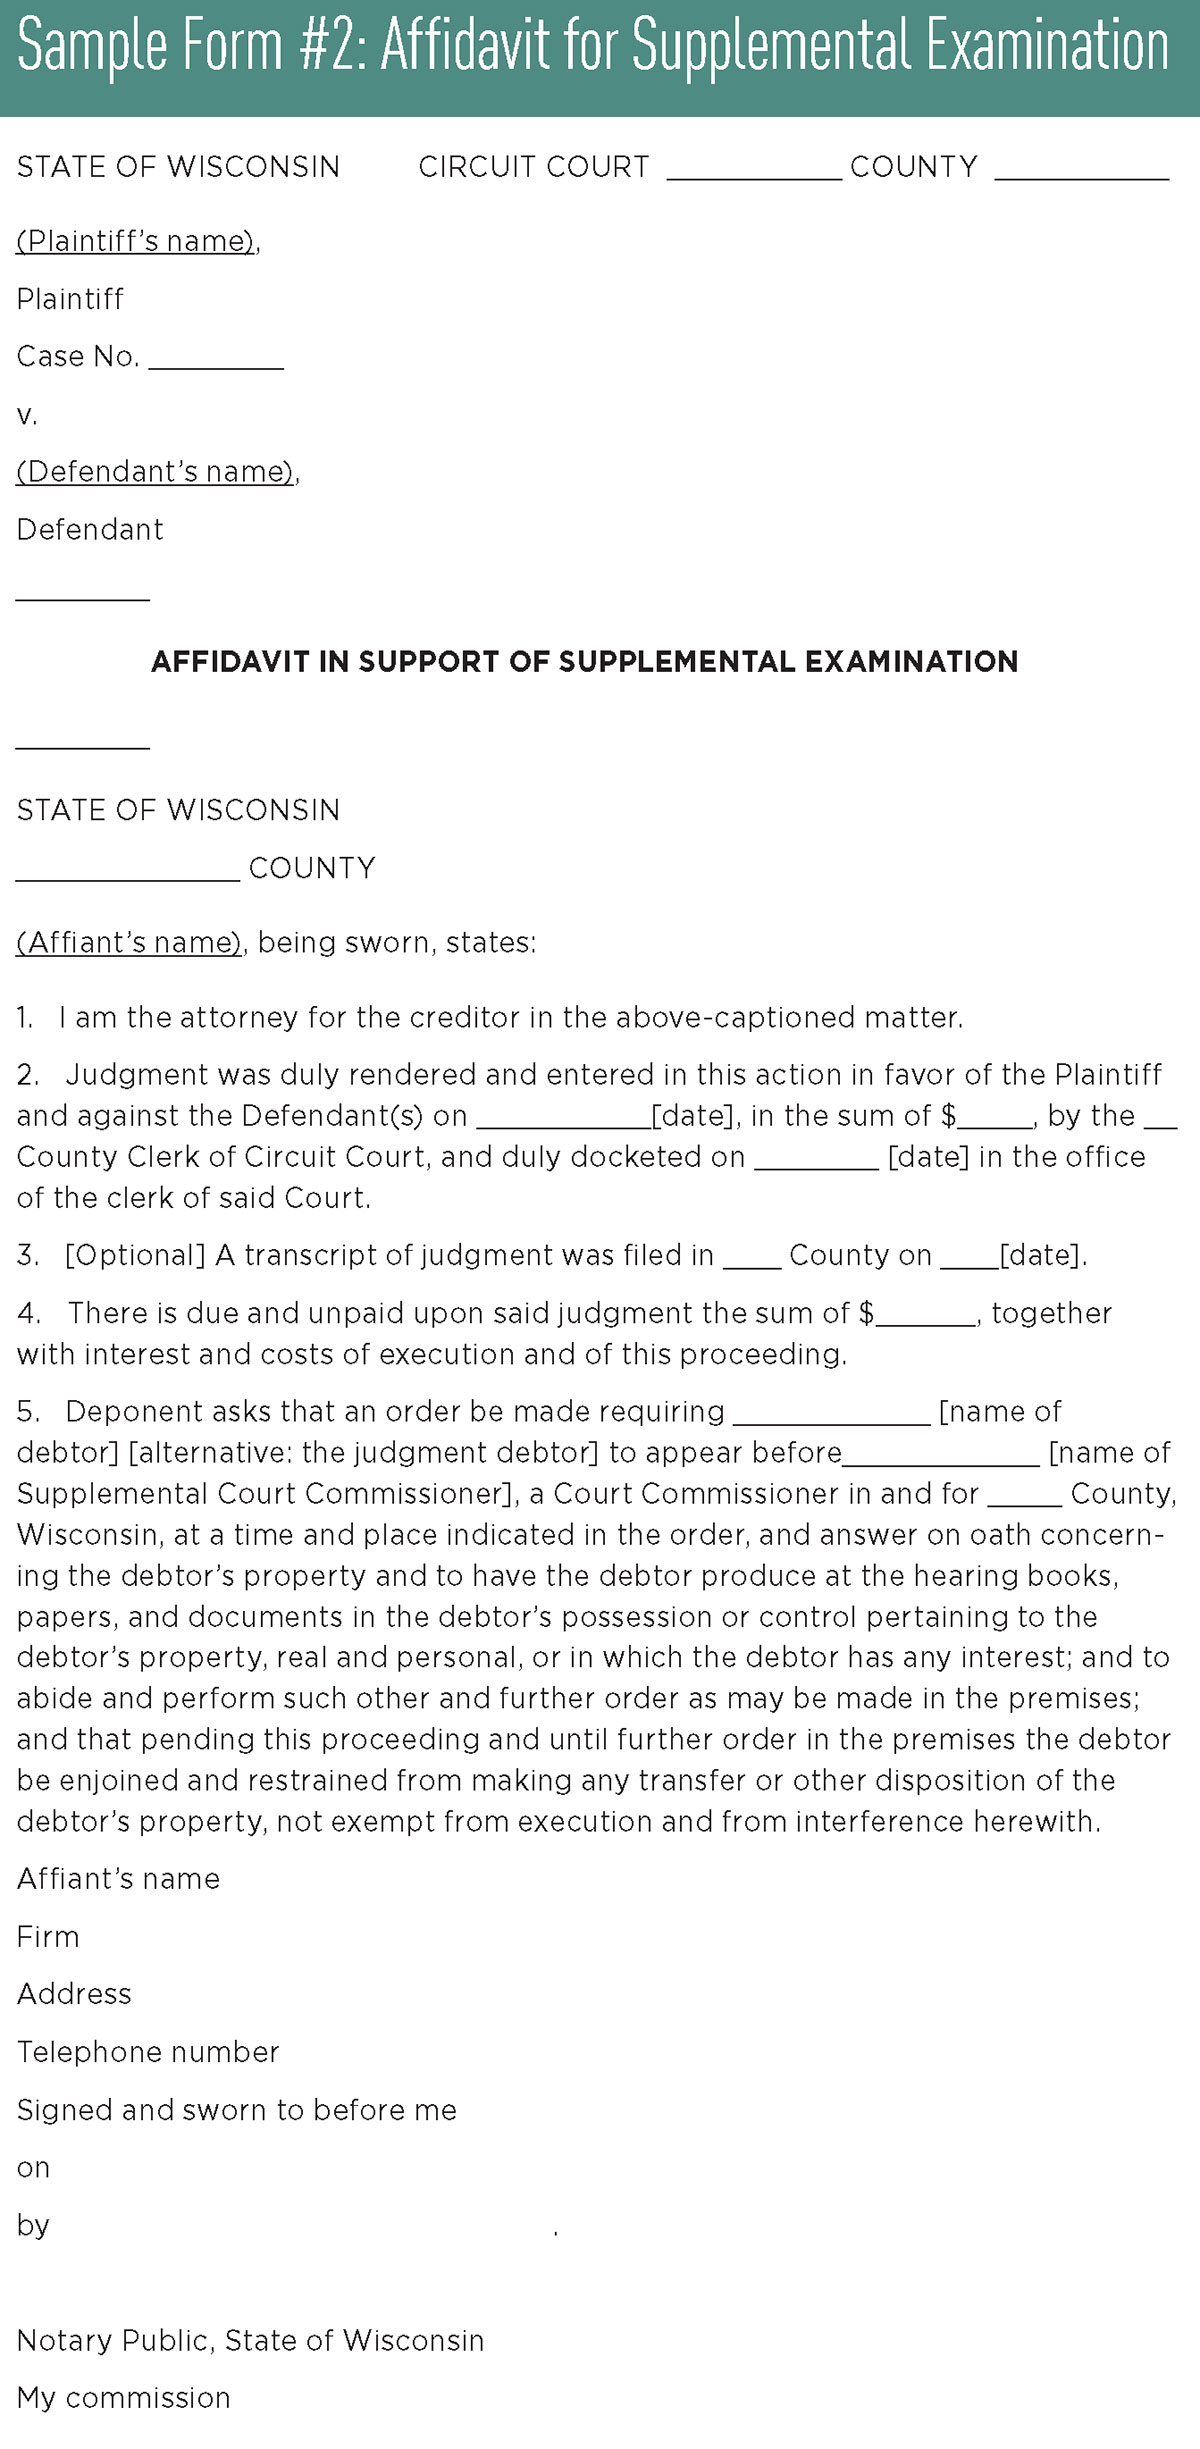 Sample form 2: Affidavit for supplemental examination